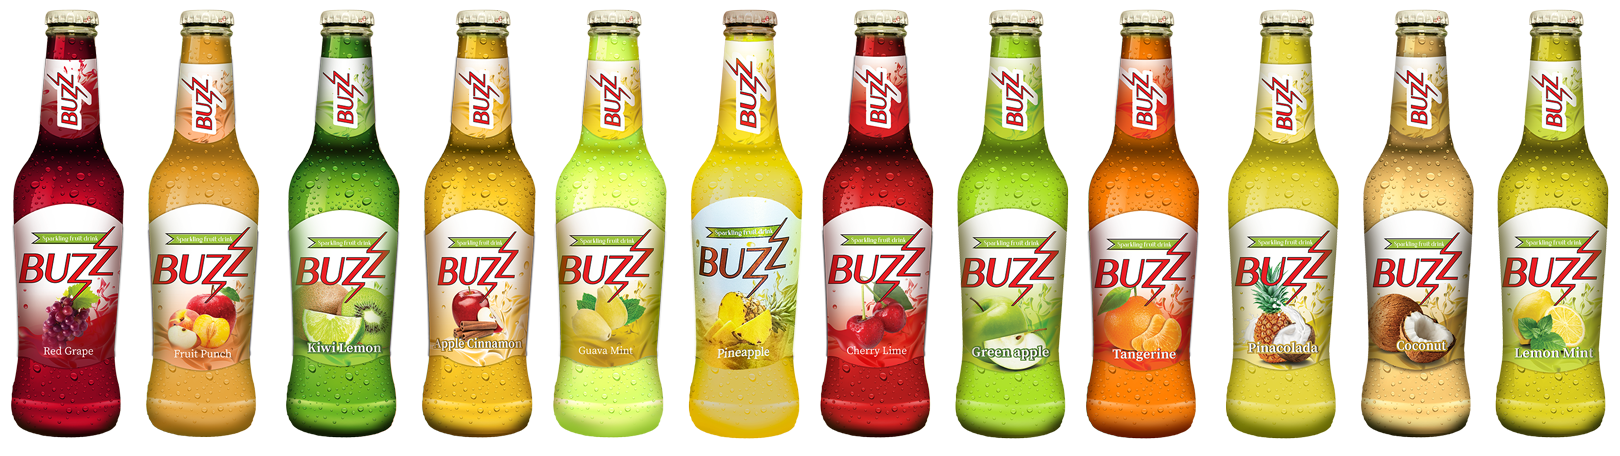 bizz buzz drinking game